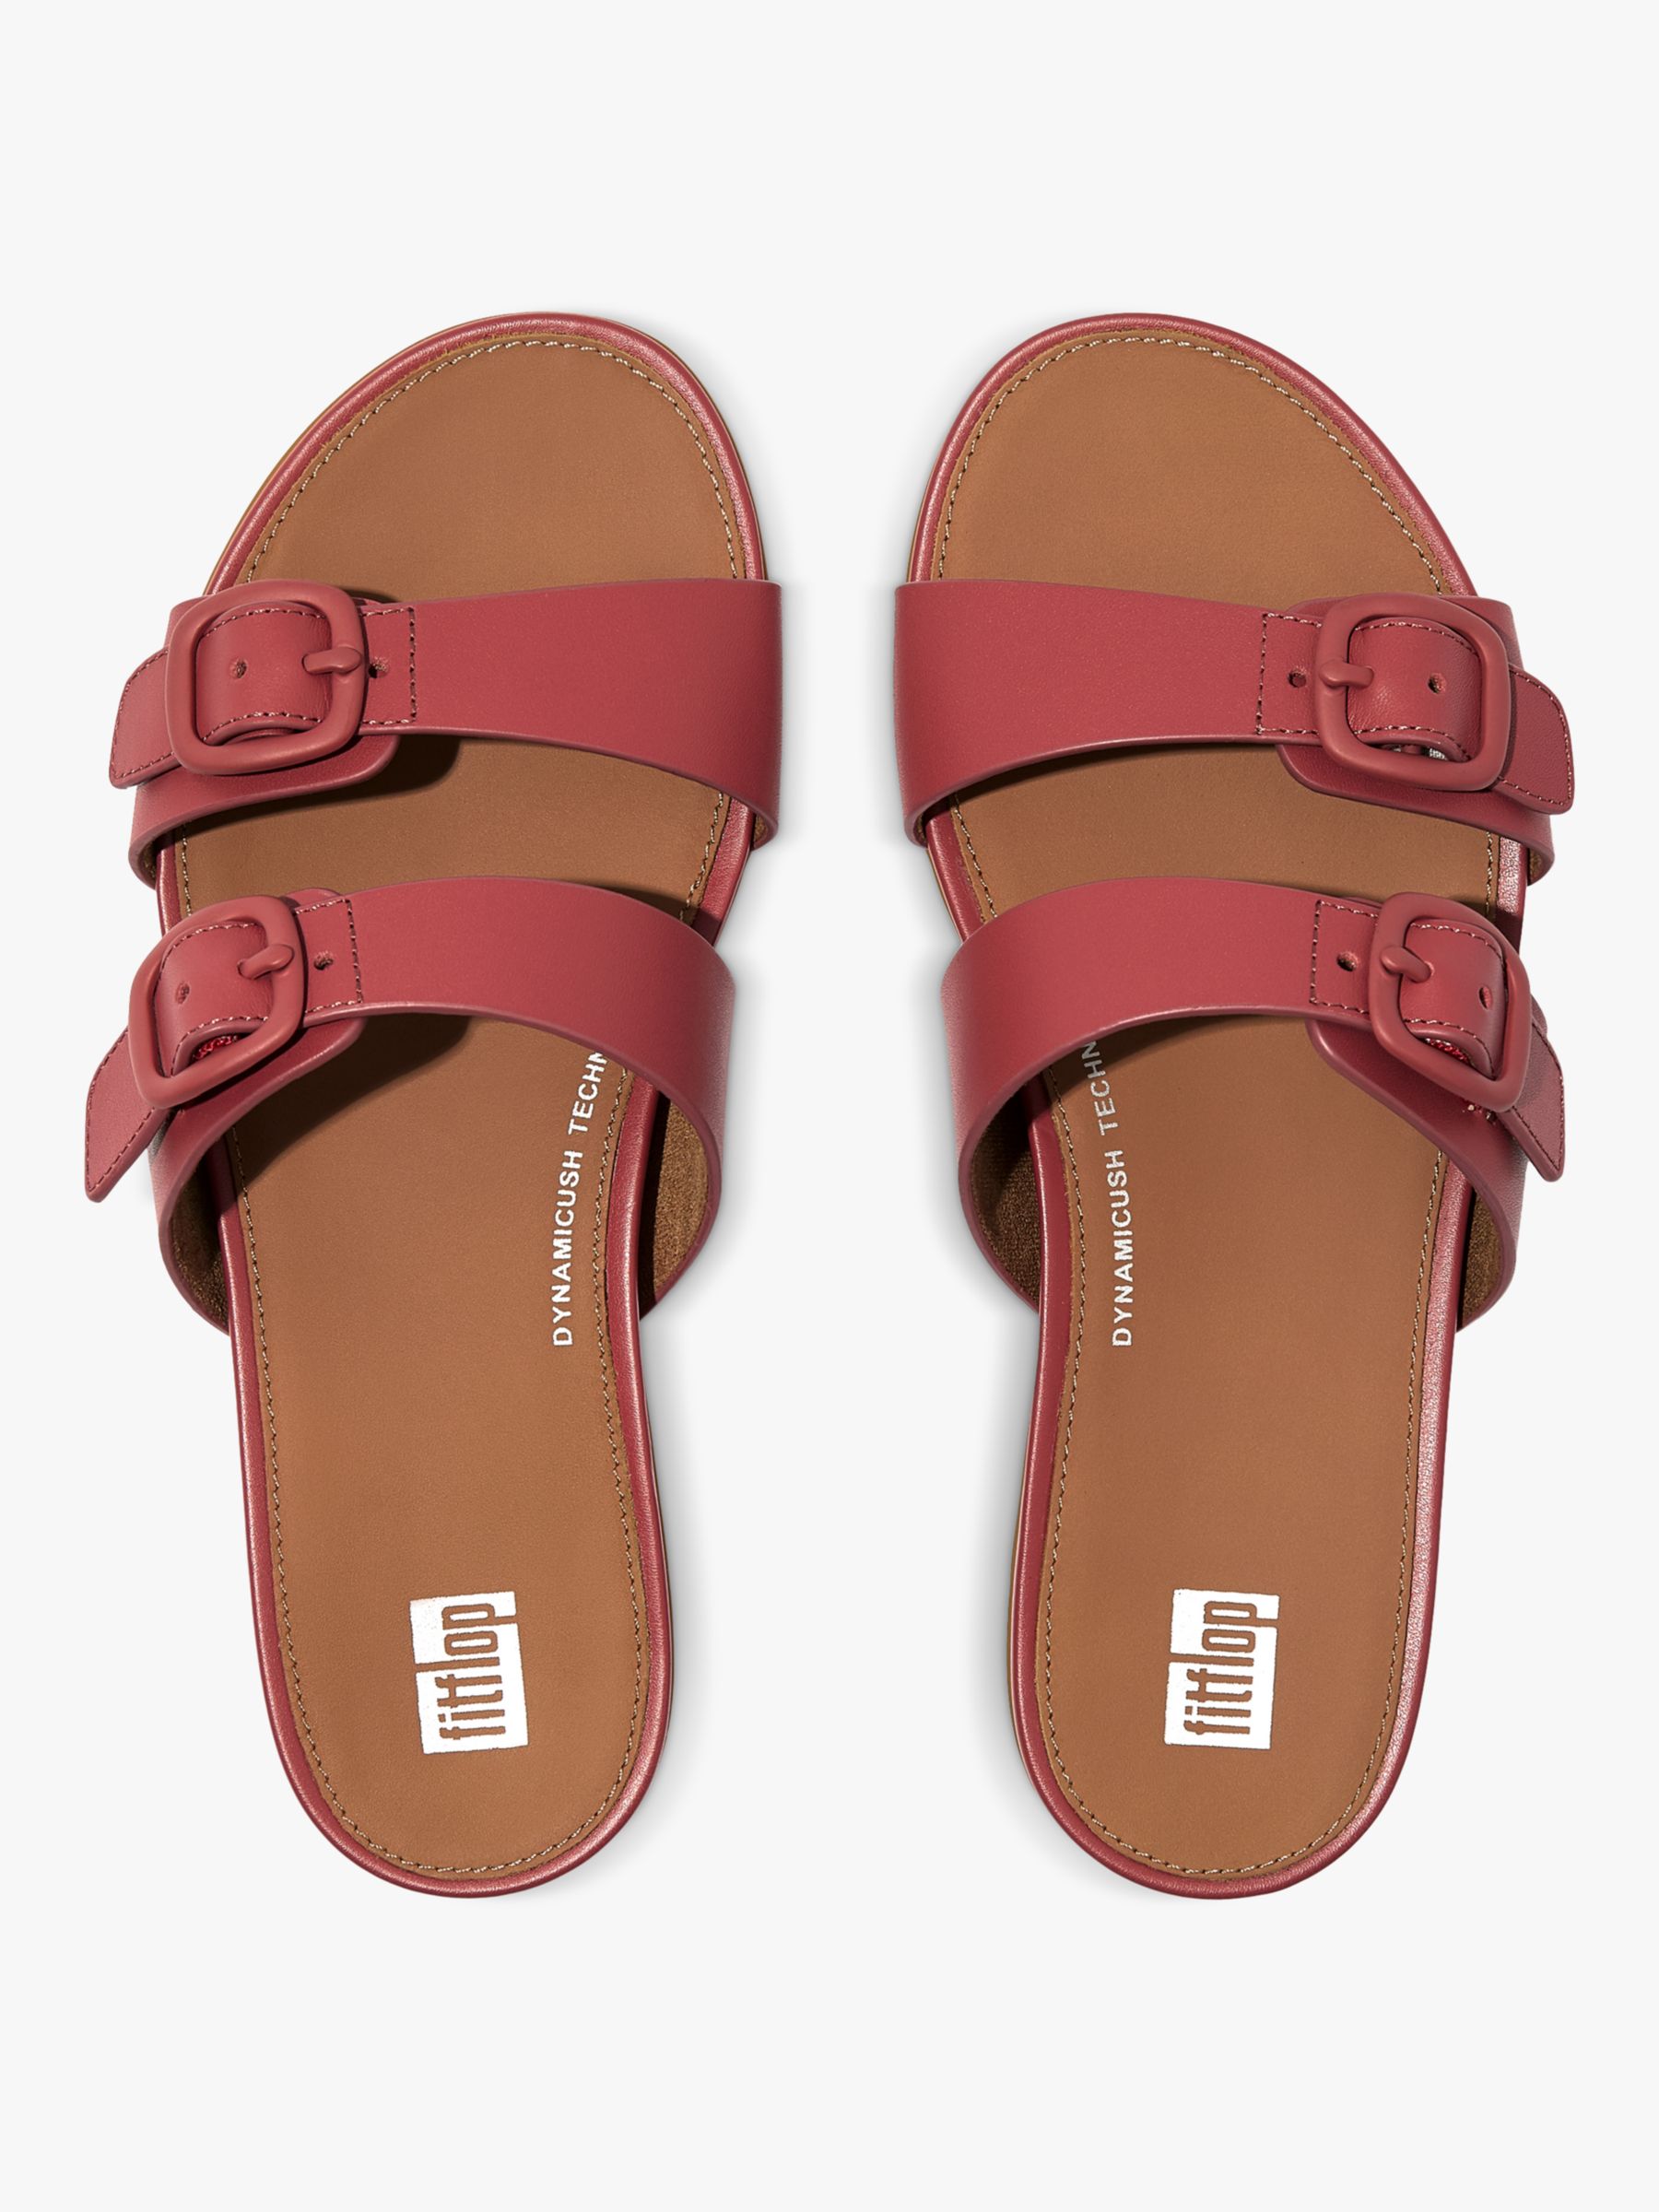 FitFlop Gracie Leather Flip-Flops | Dillard's